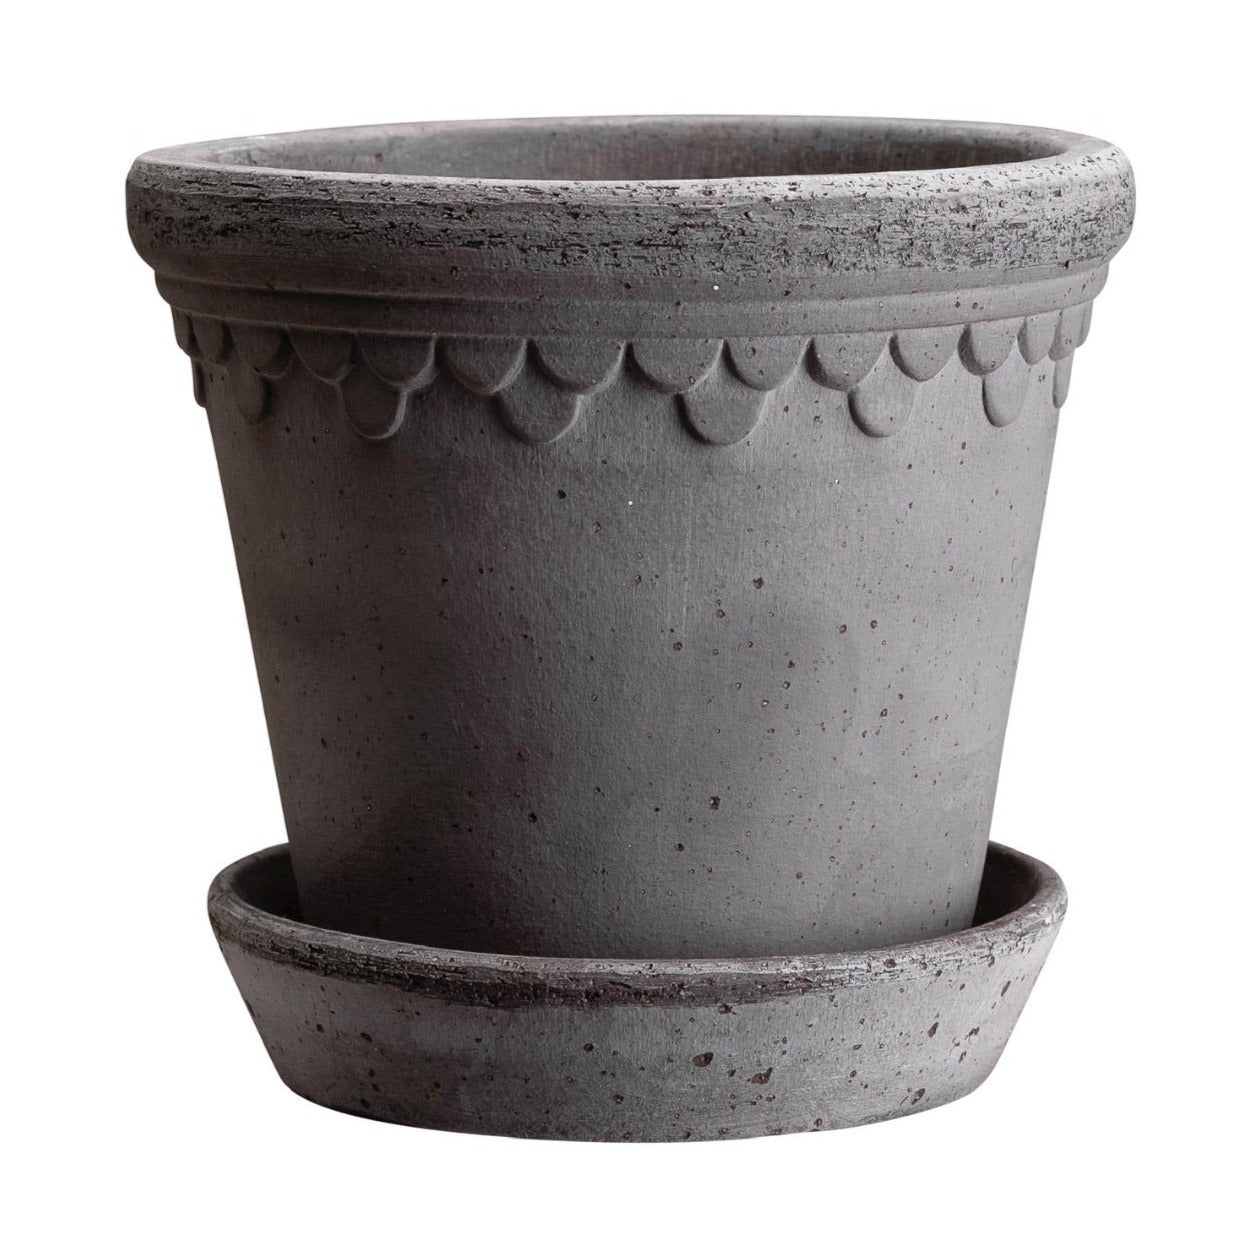 Bergs Potter Grey Copenhagen Pot and Saucer Set